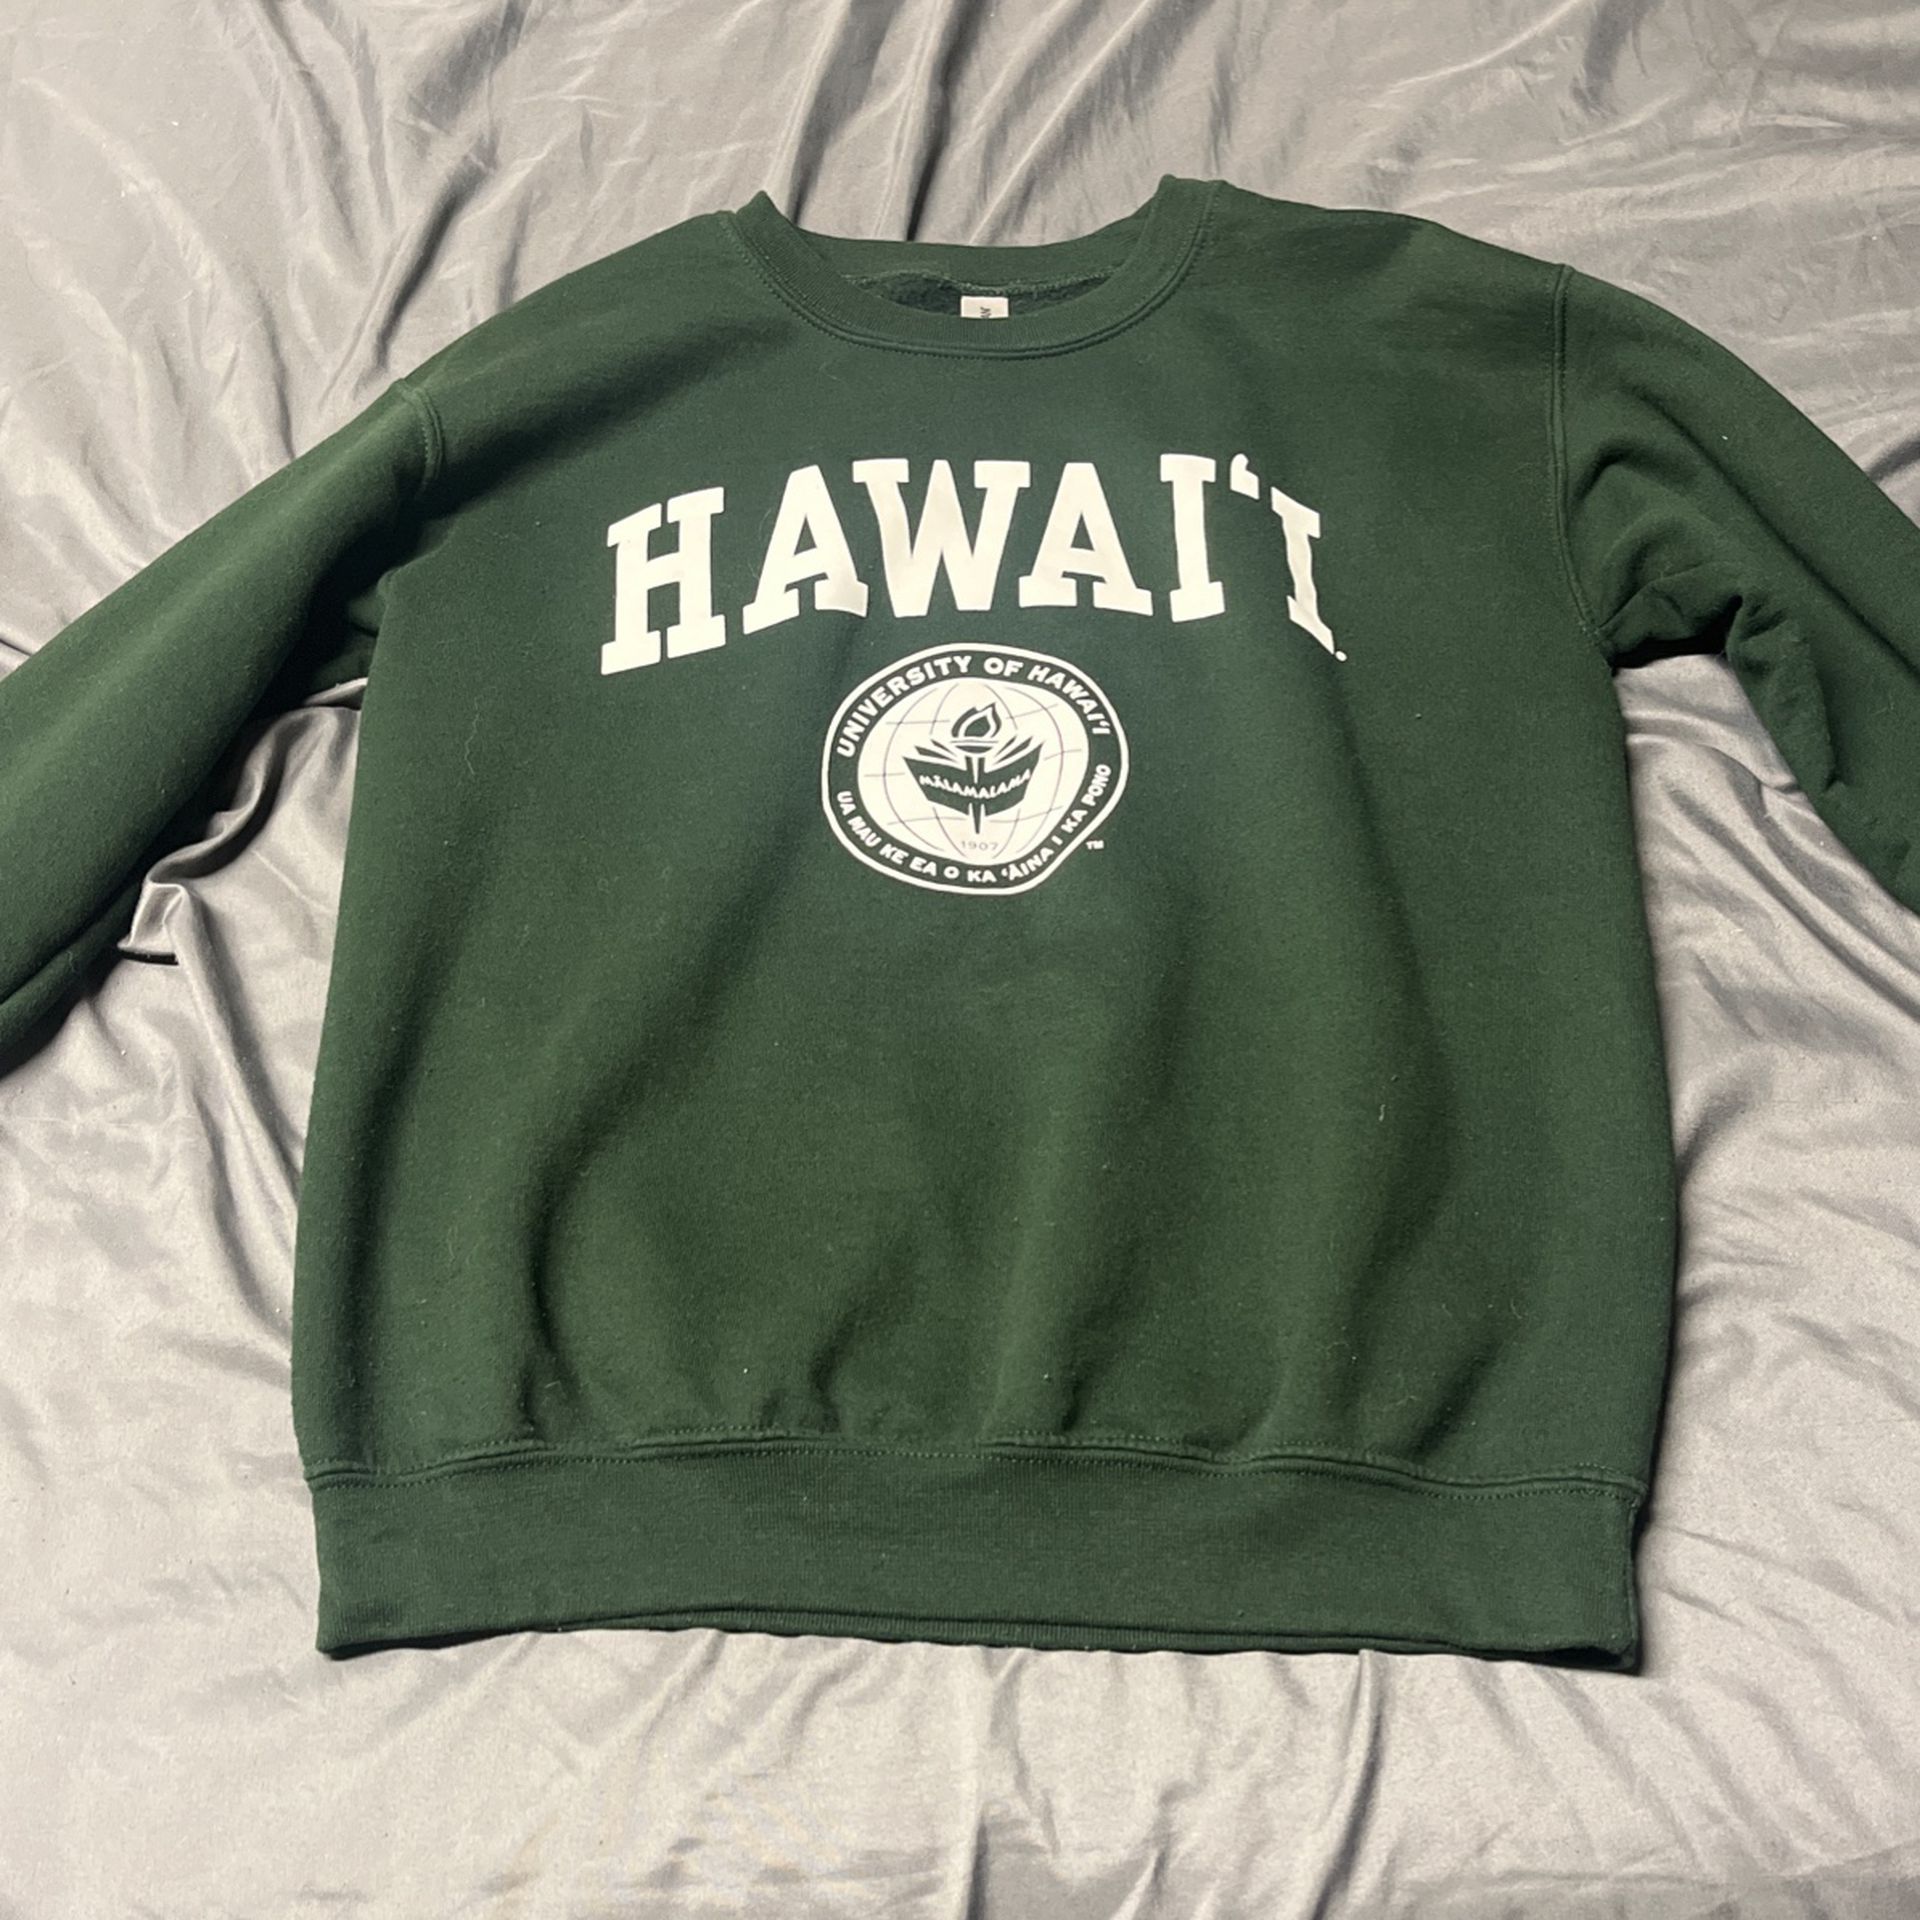 University of hawaii crewneck size S